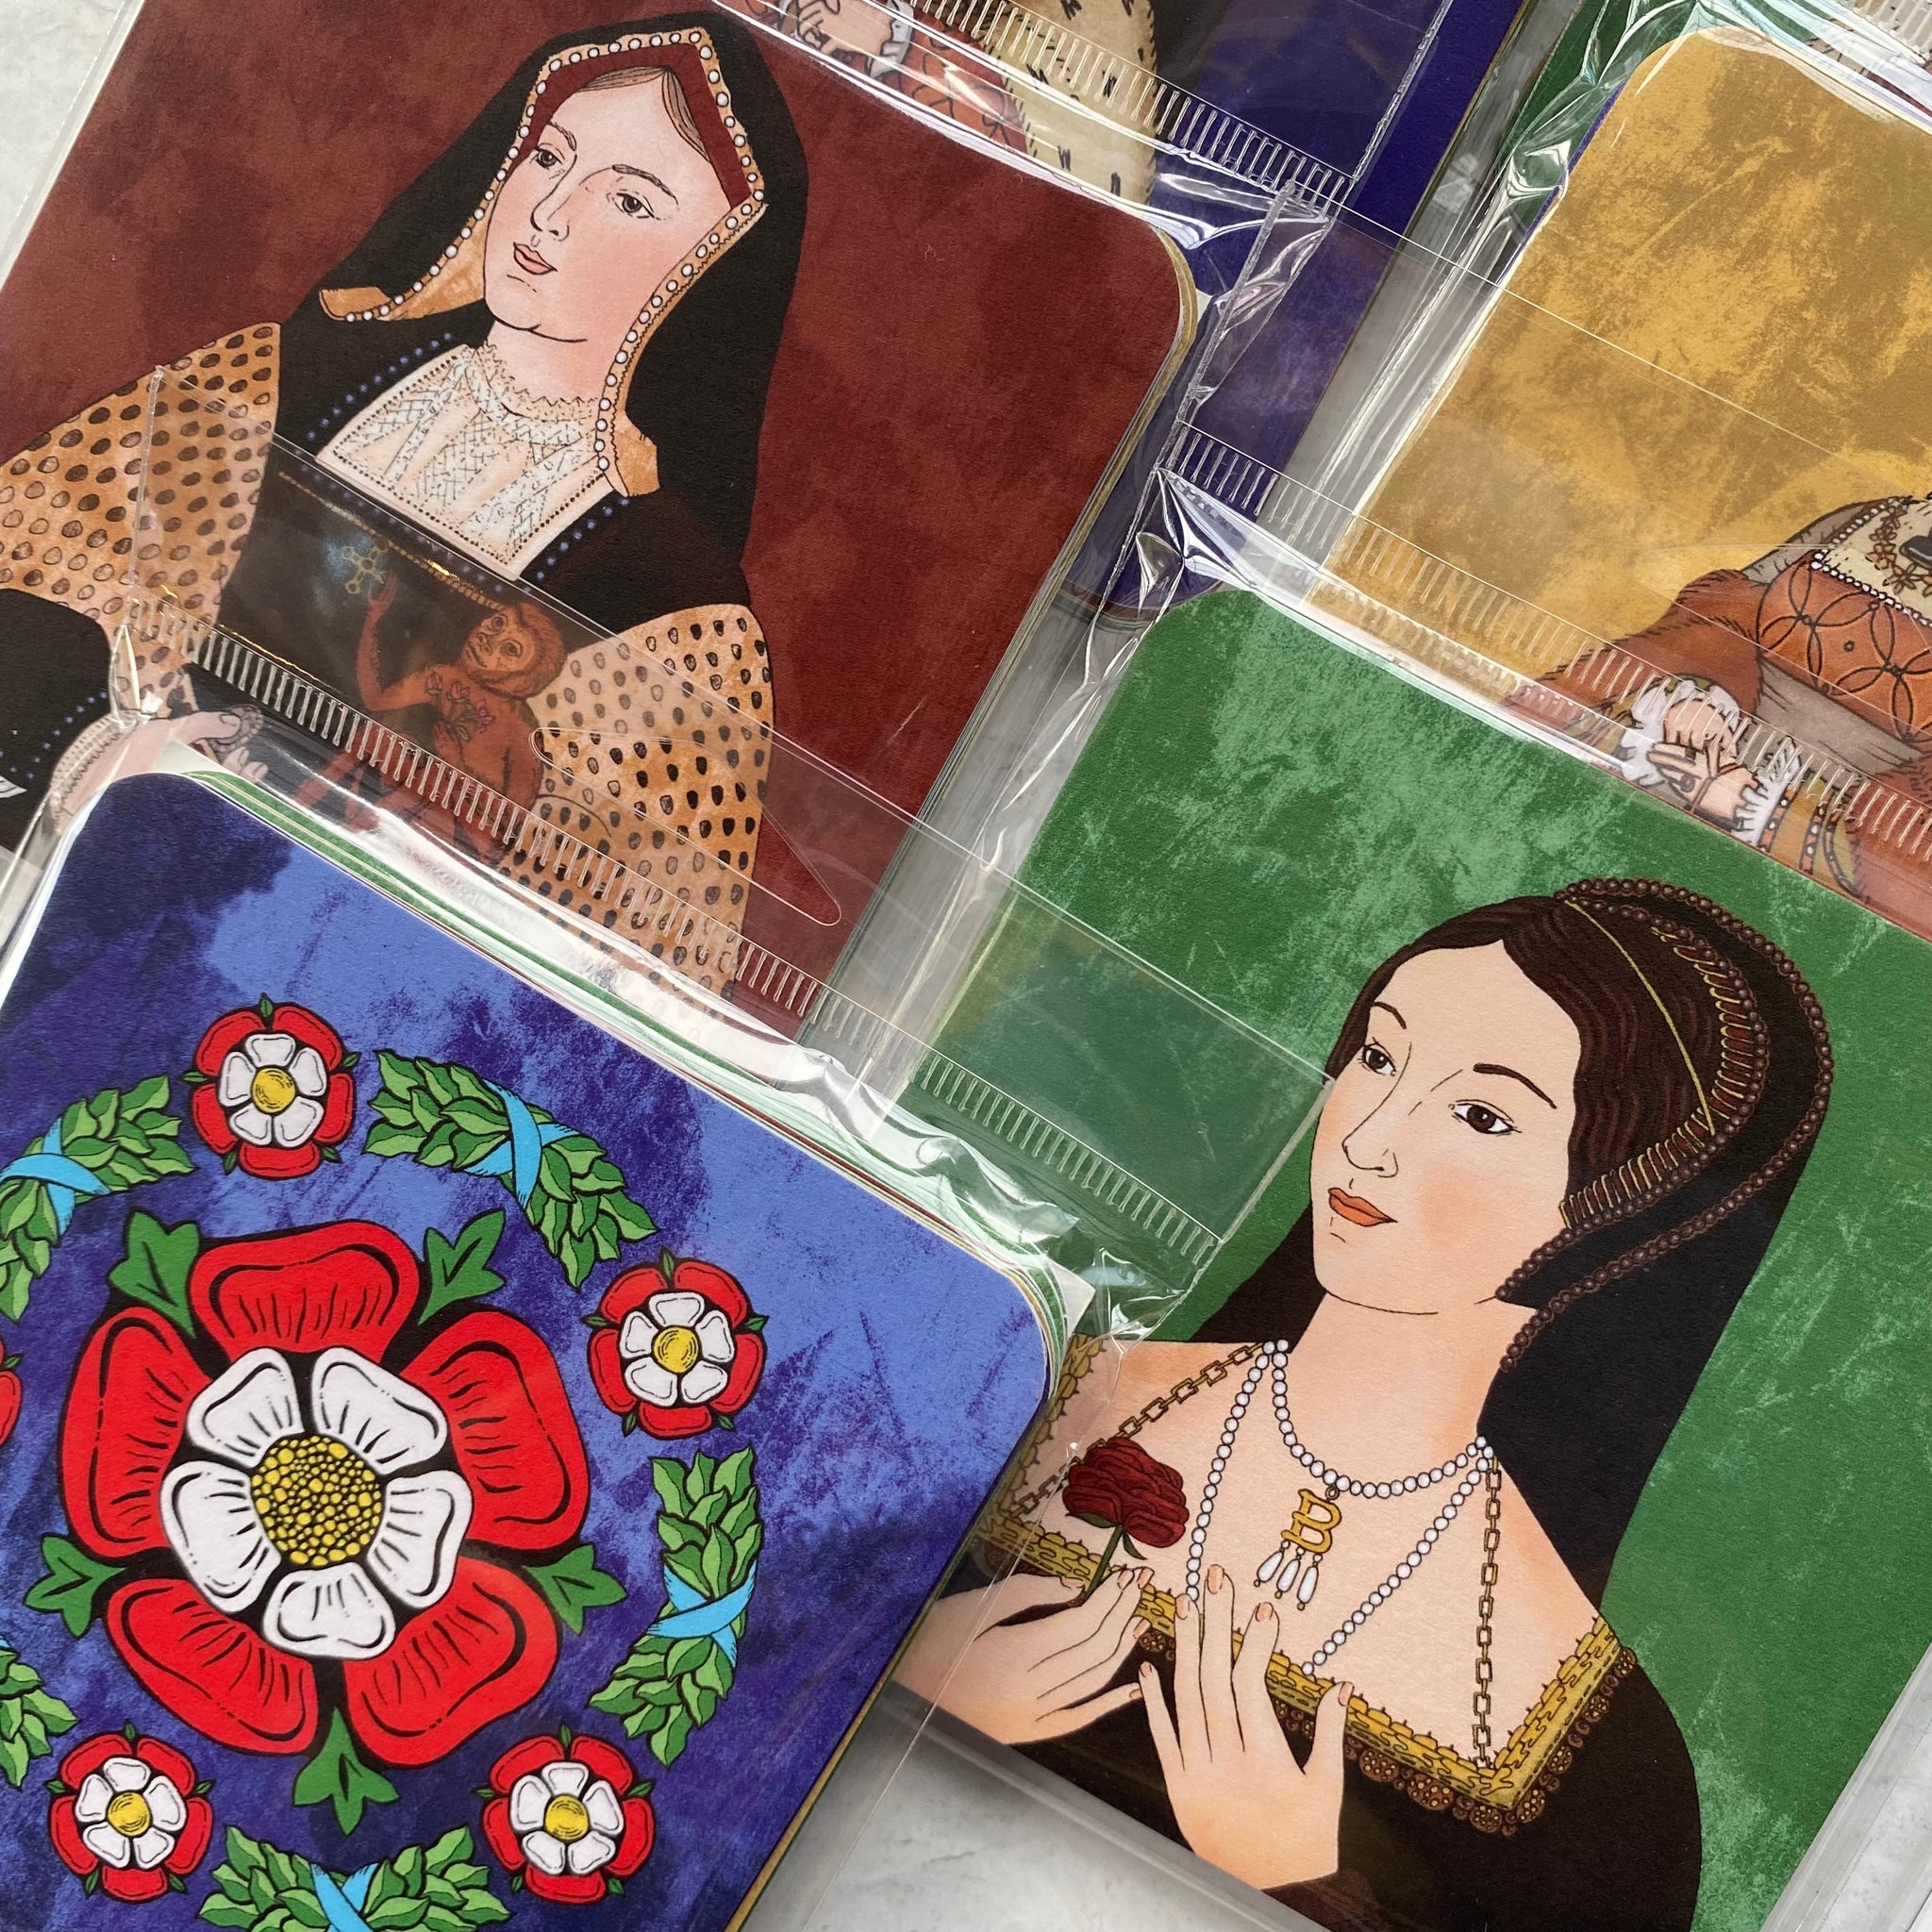  Anne Boleyn Tudor Rose Premium Leather Coasters - Set of 6 with  Holder